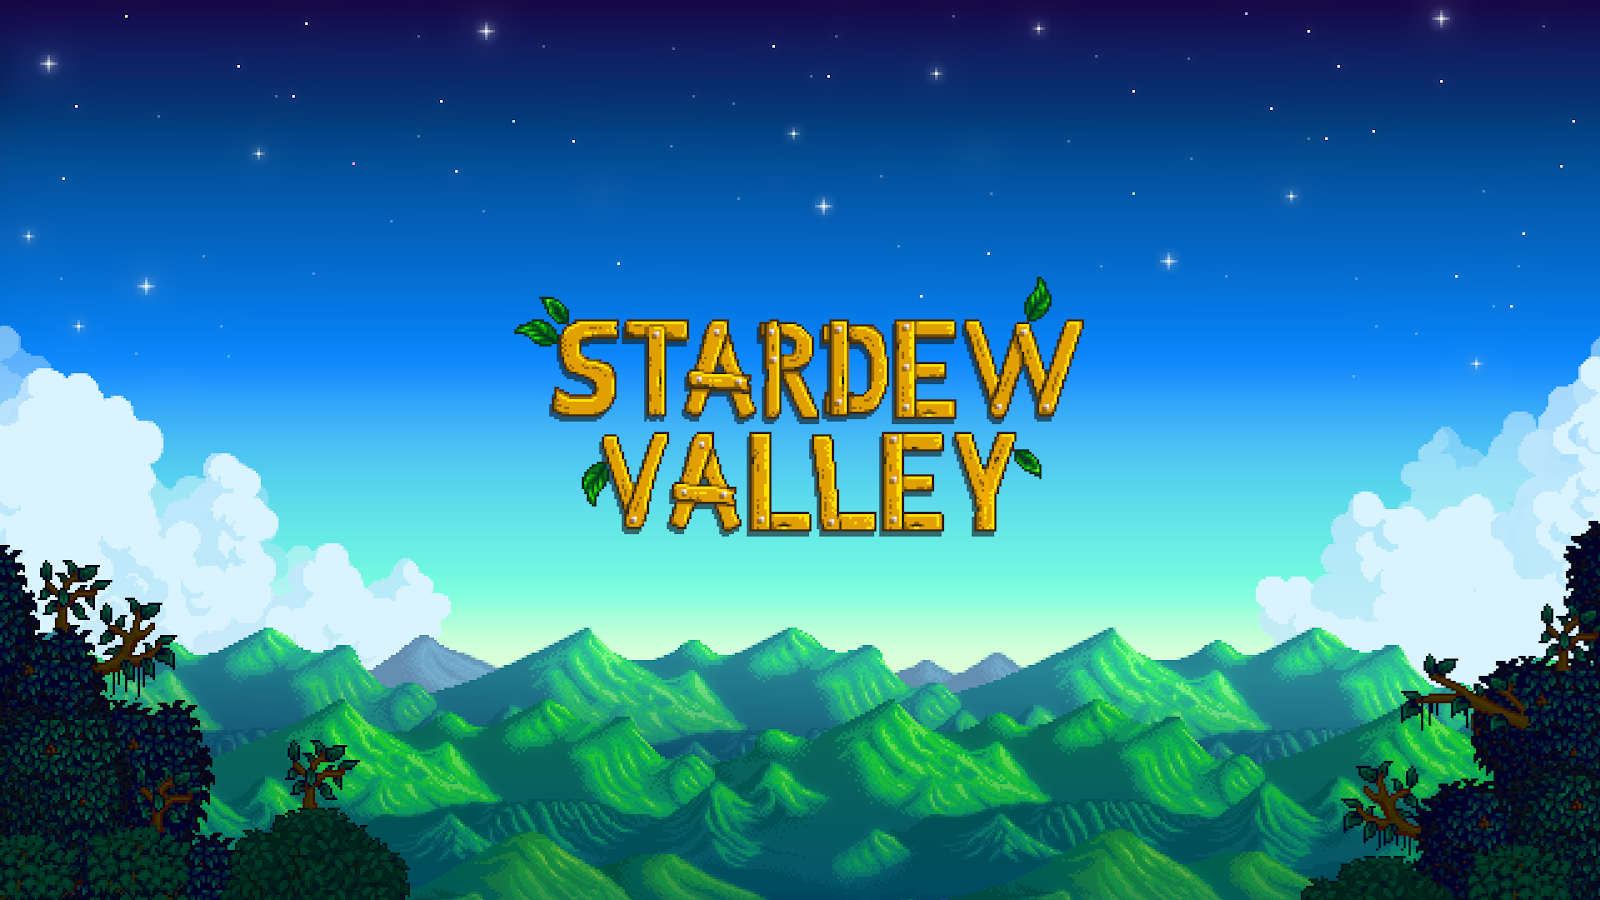 Artwork from Stardew Valley game